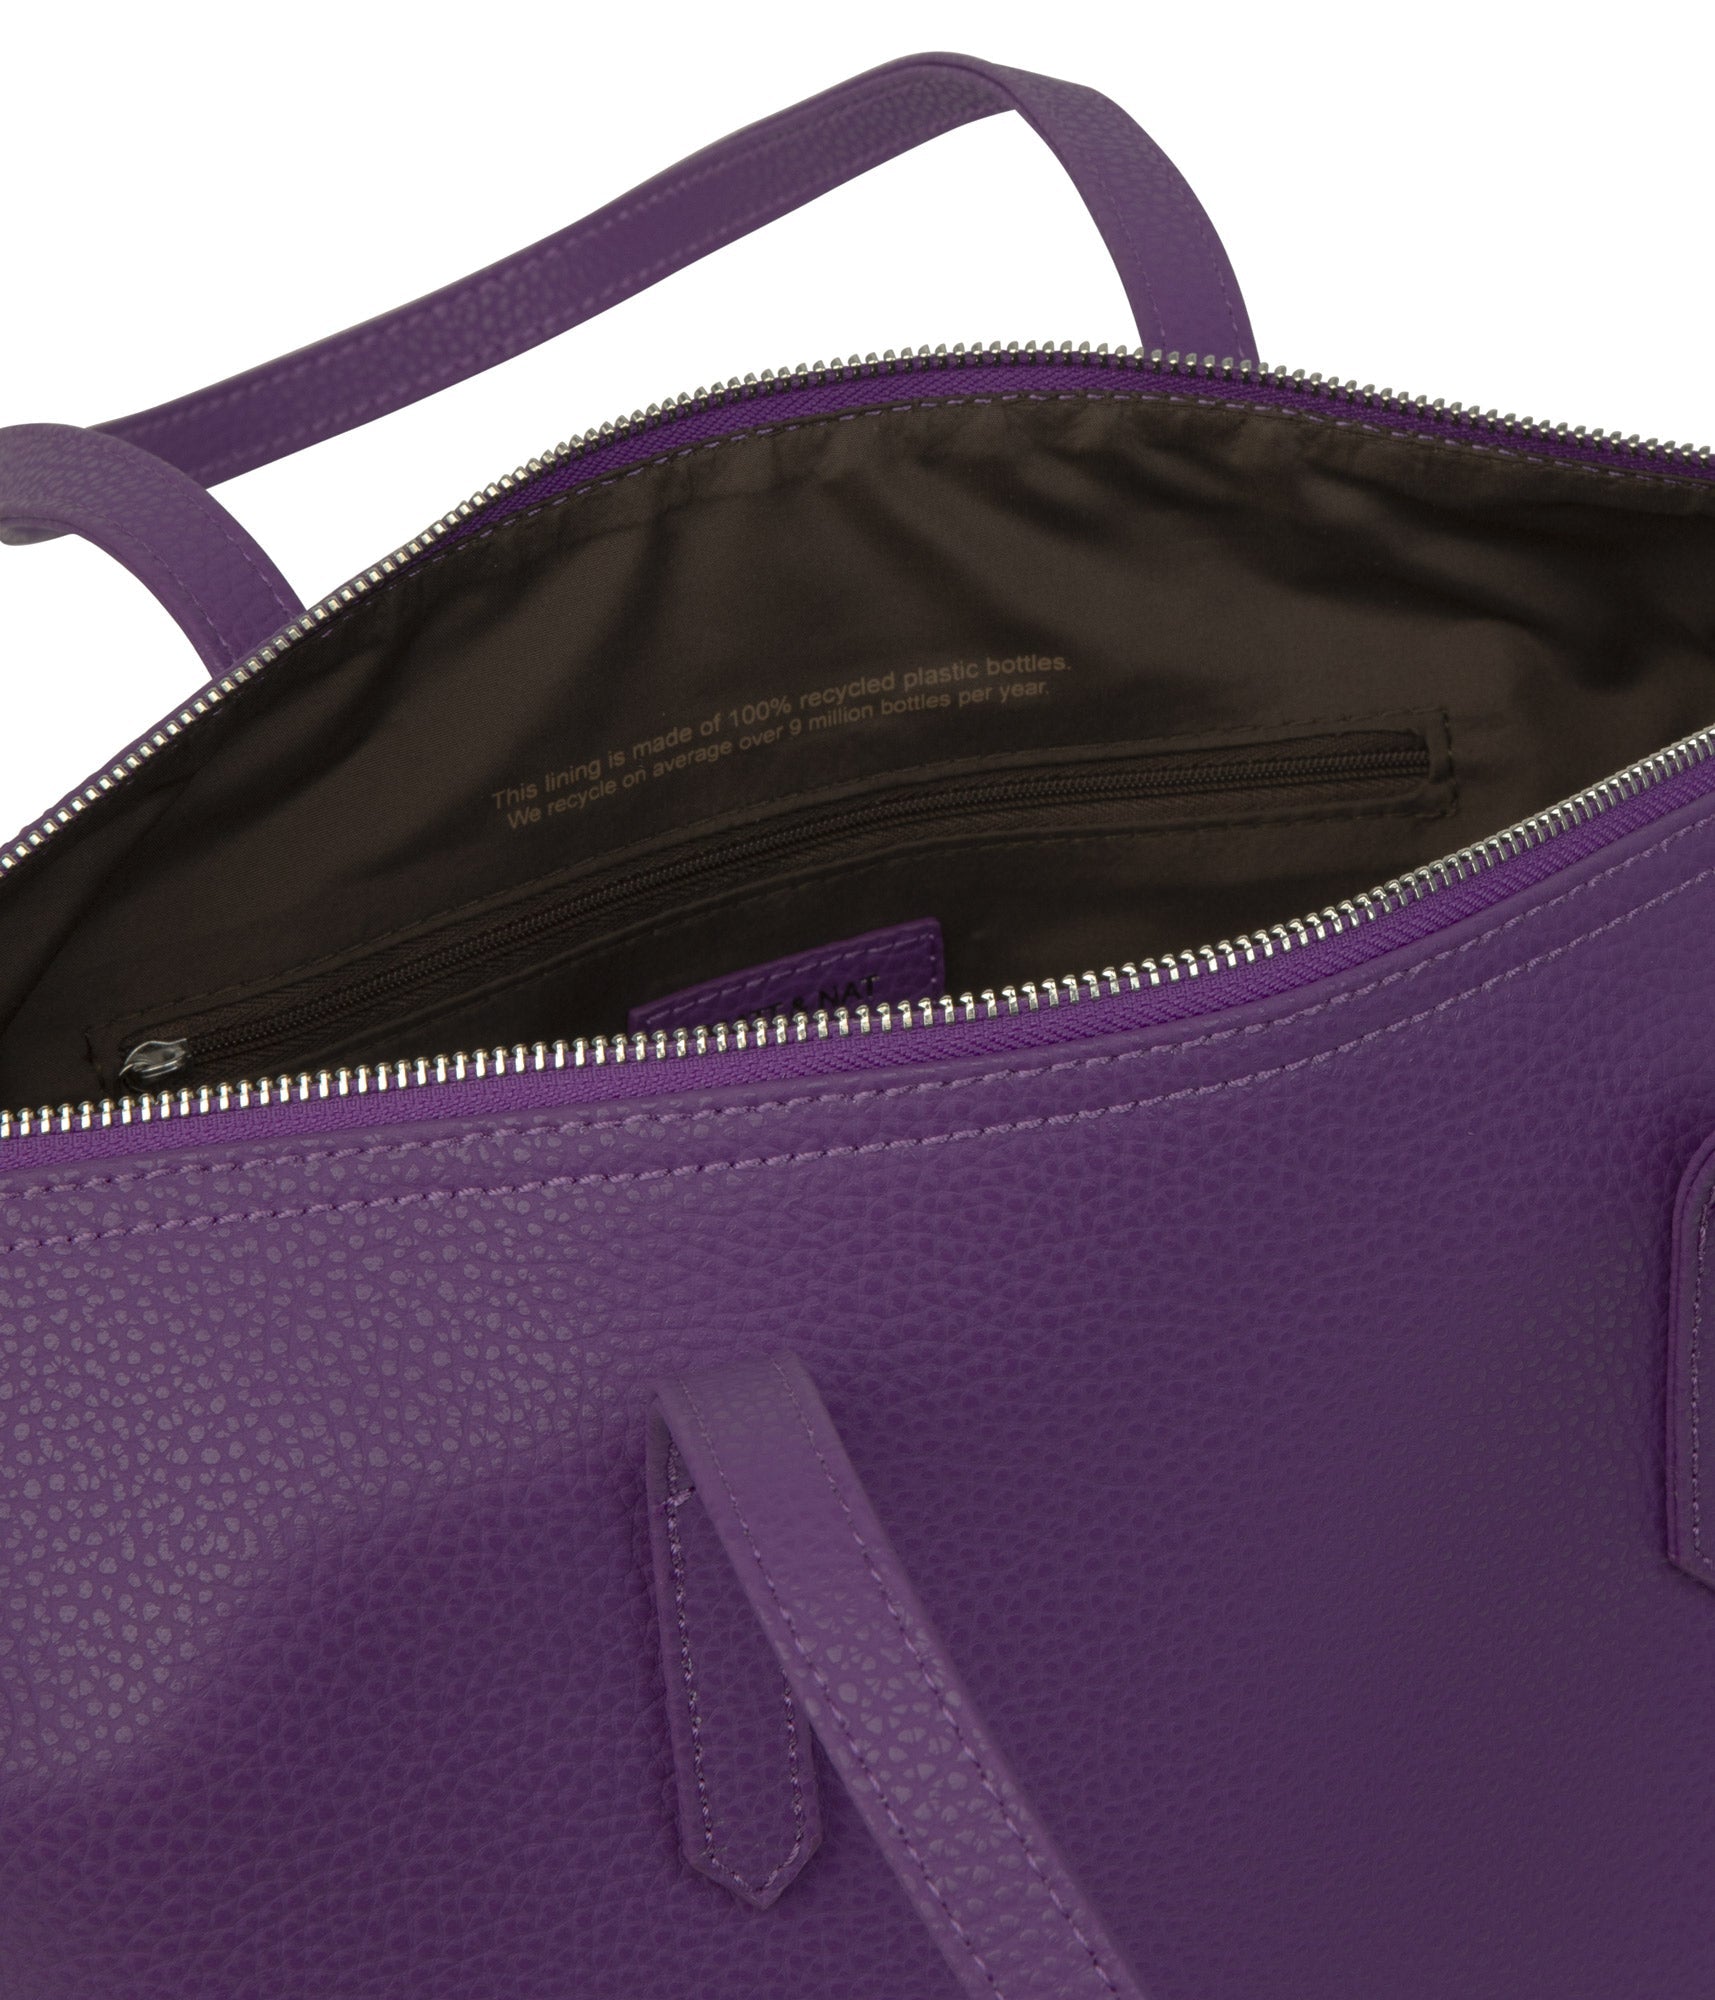 ABBI Vegan Tote Bag - Purity | Color: Purple - variant::violet